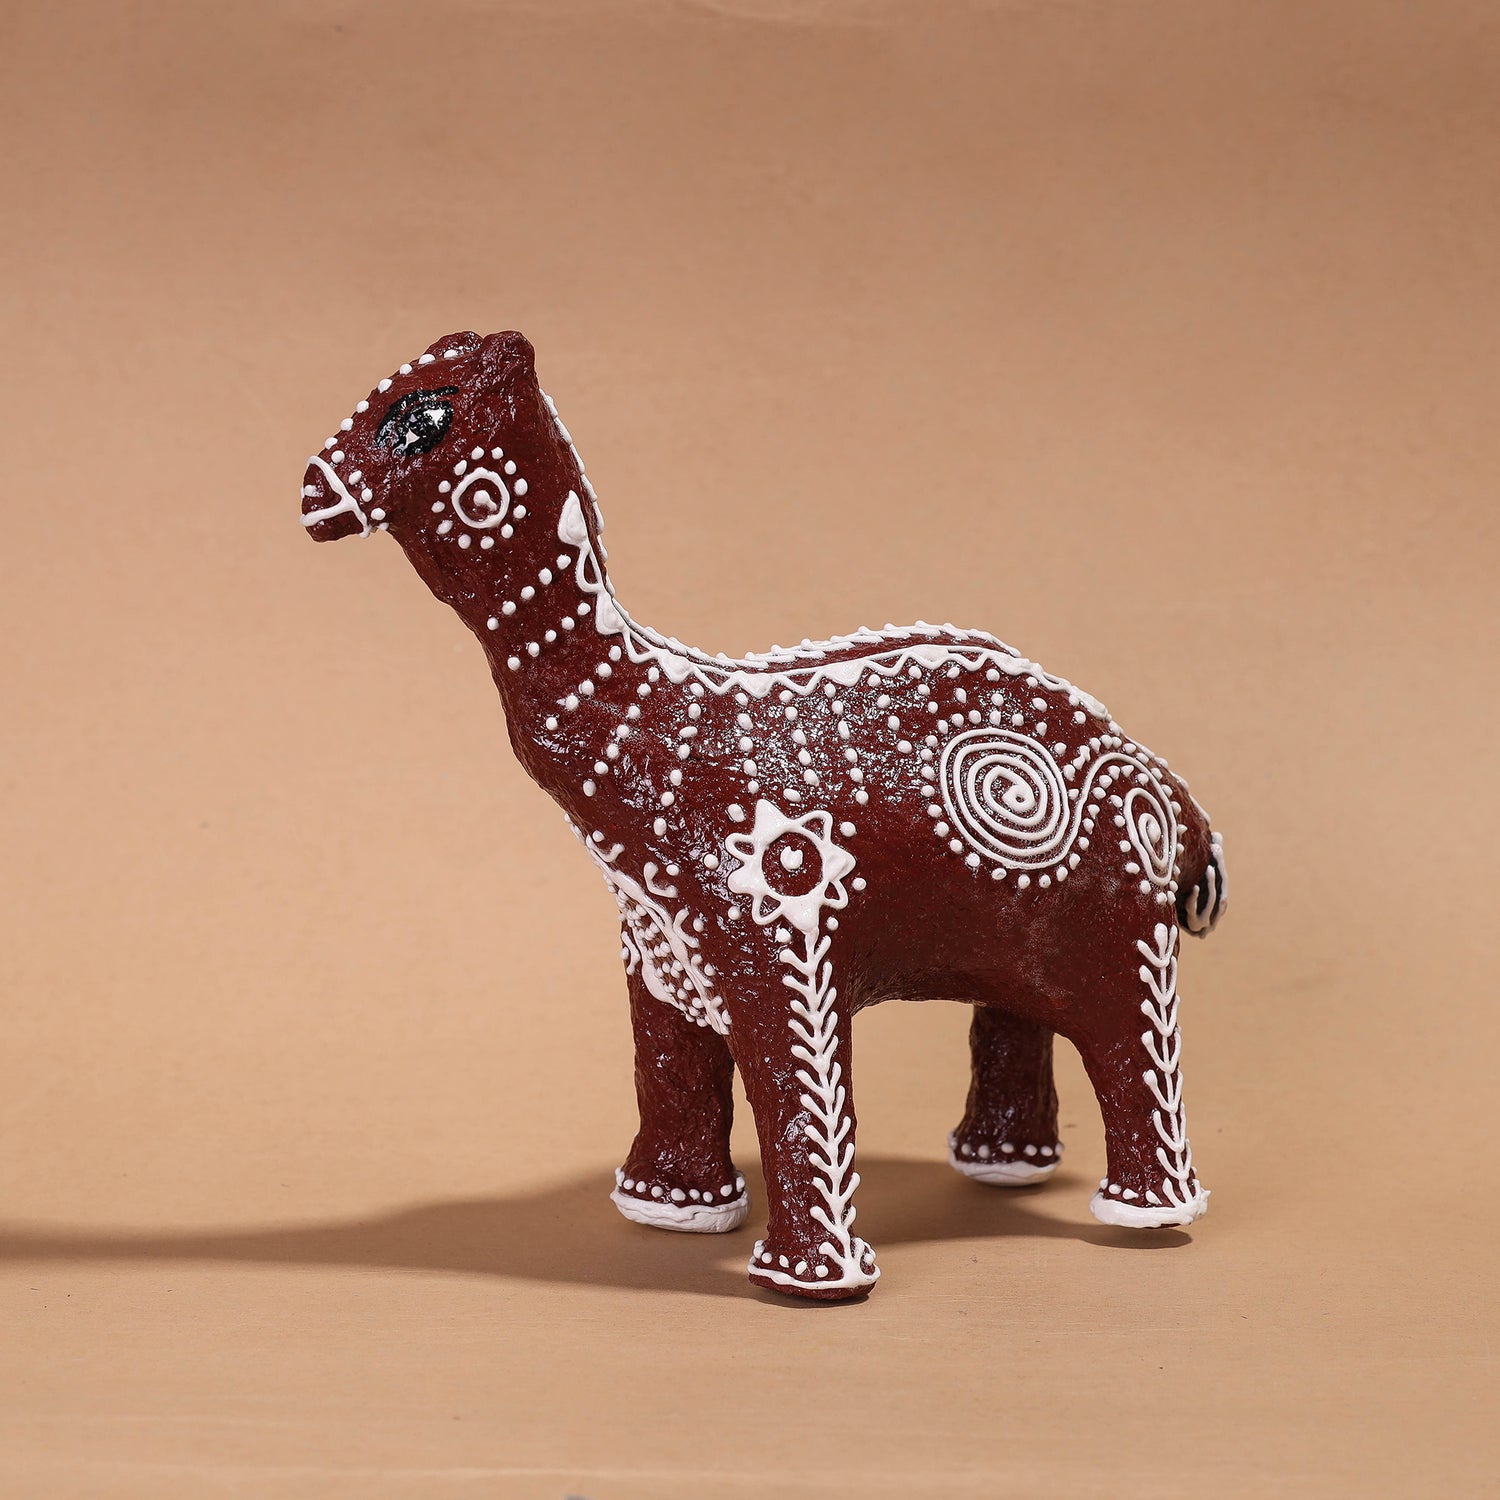 Mandana Art Handpainted Paper Mache Camel (11 x 3 in)